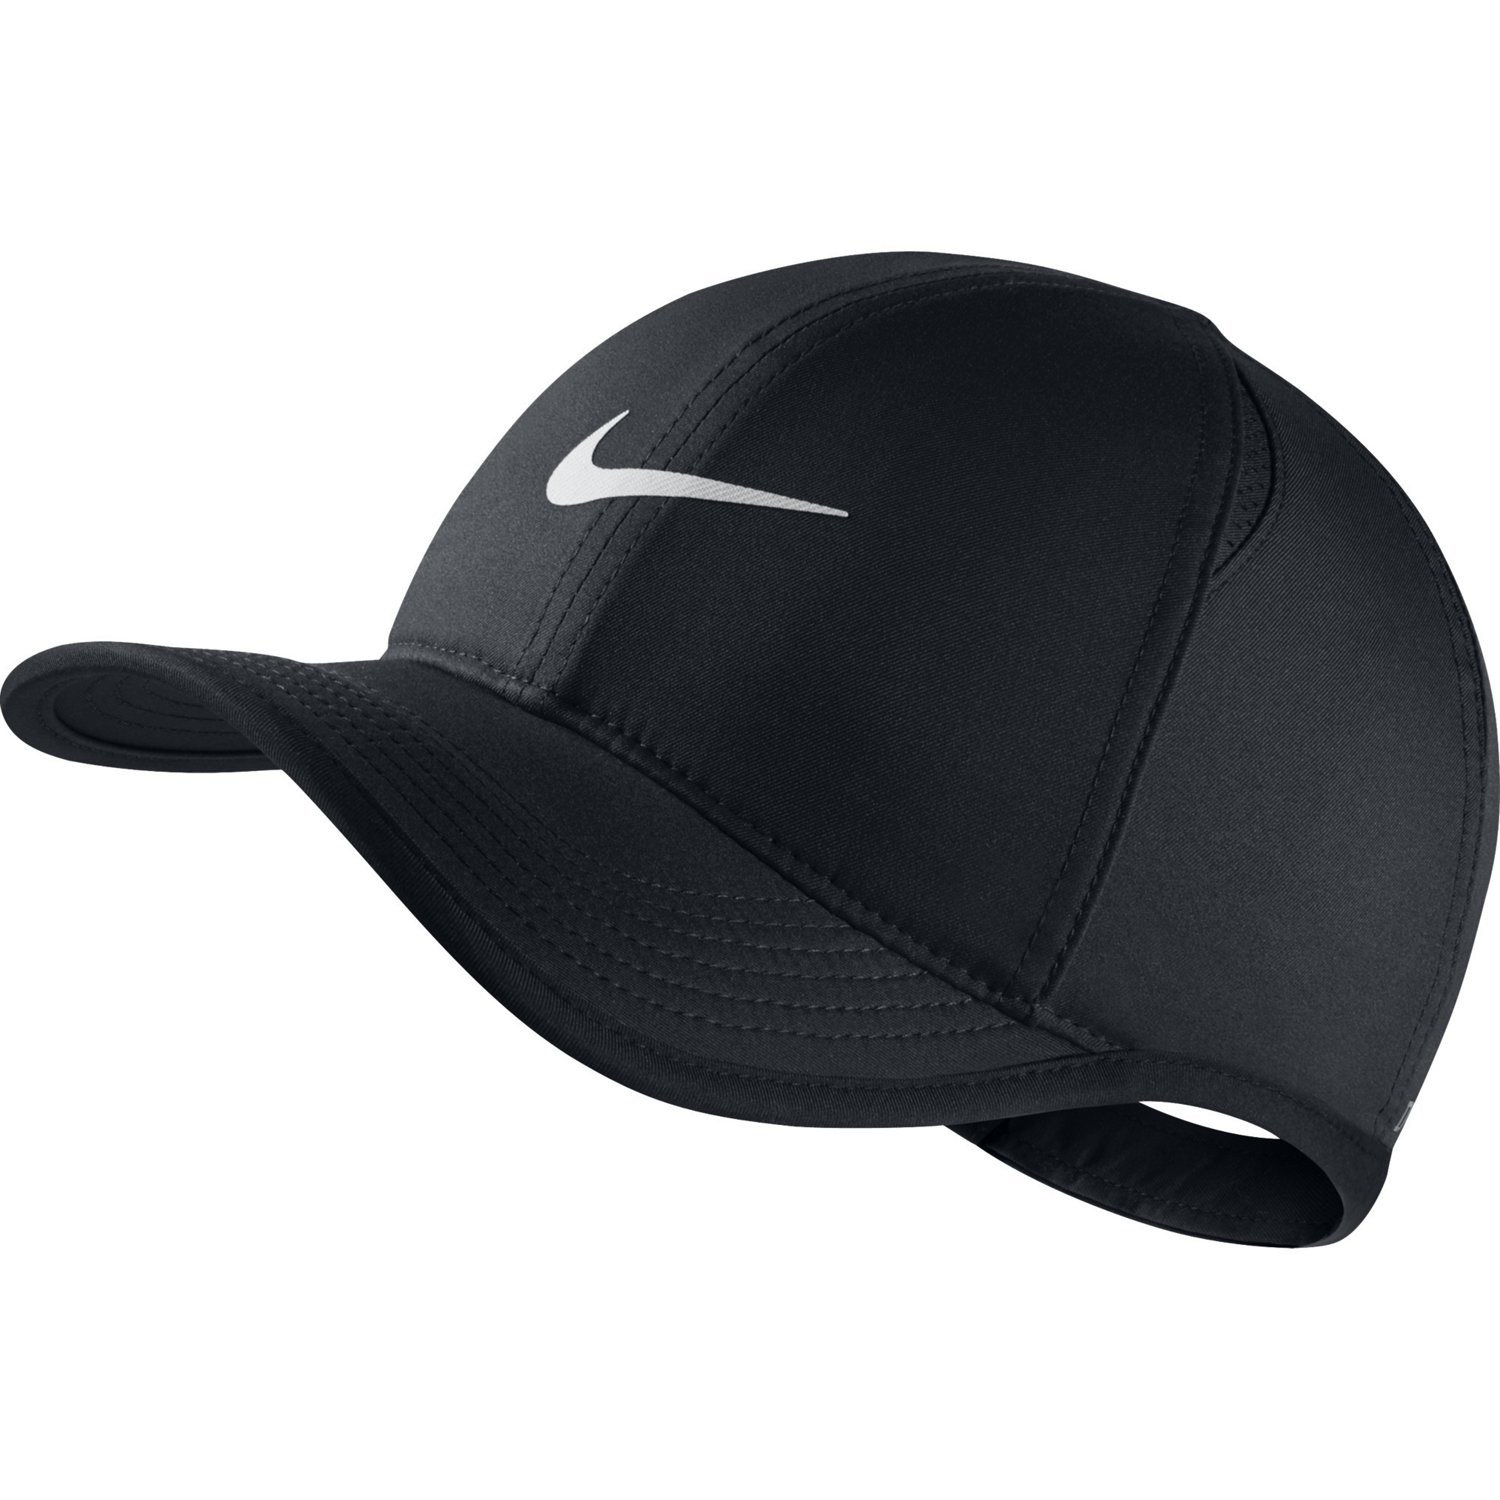 Nike Aerobill Featherlight (mlb Yankees) Adjustable Hat (blue) for Men